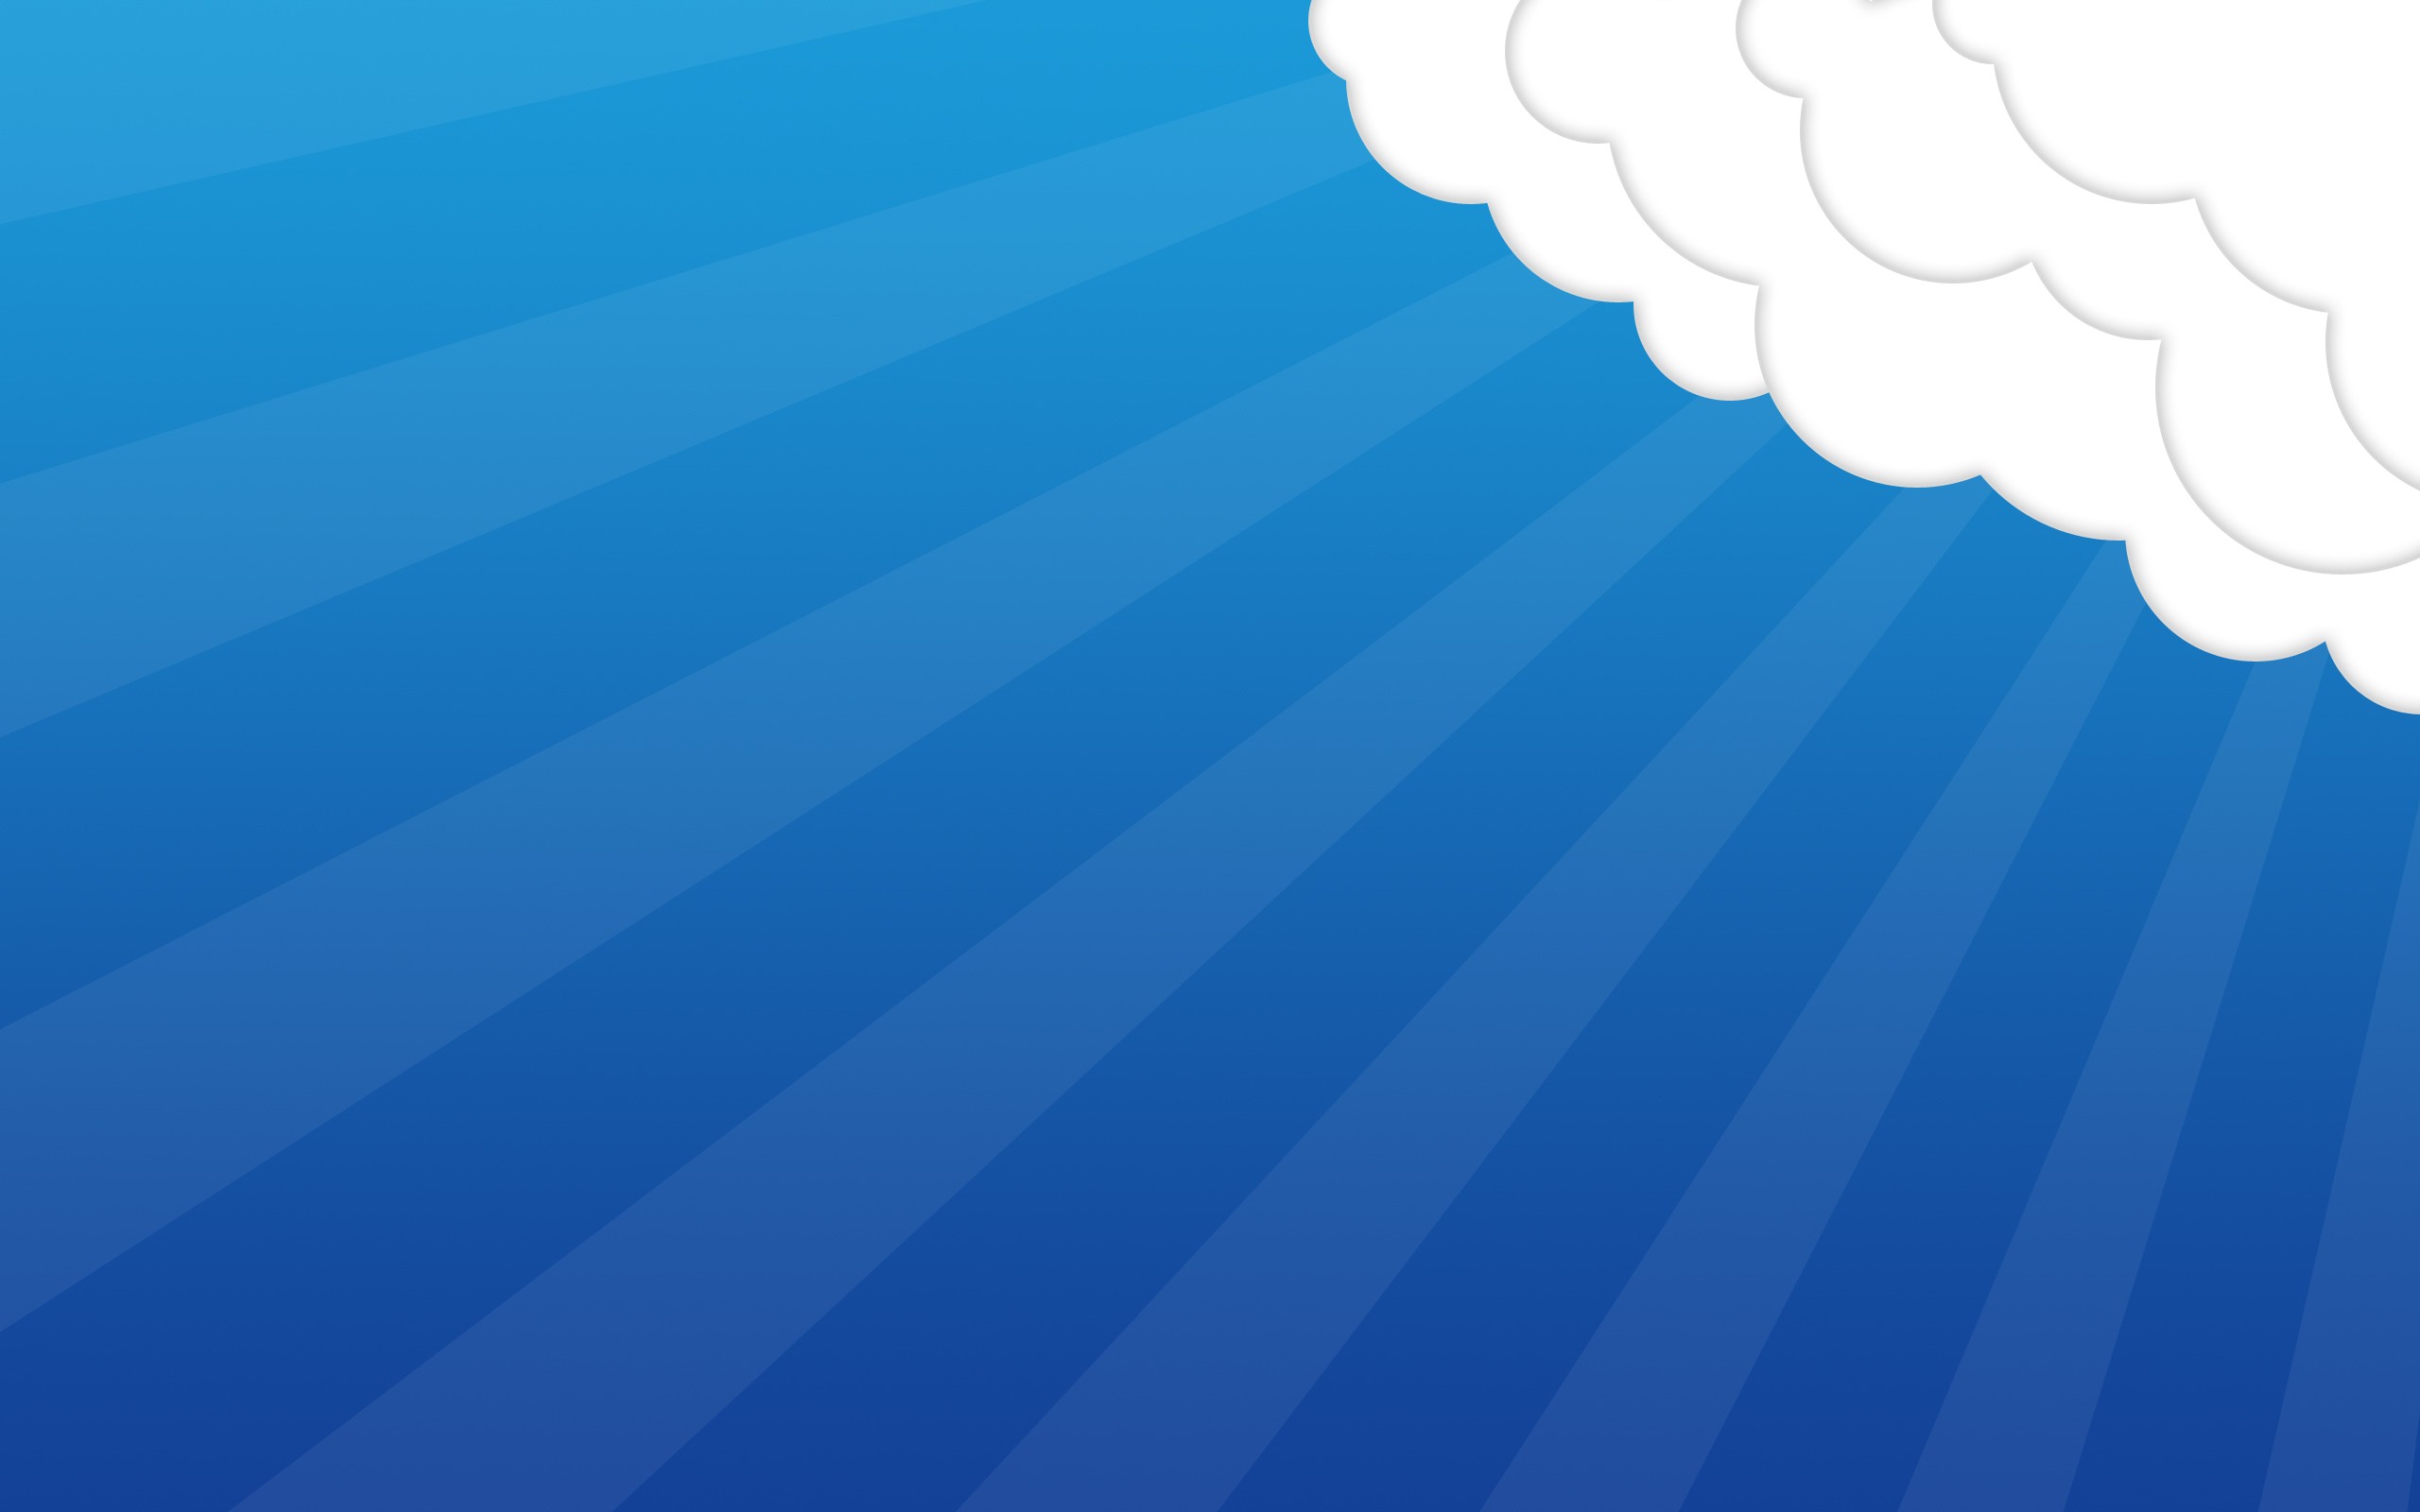 General 2560x1600 minimalism blue background clouds digital art texture